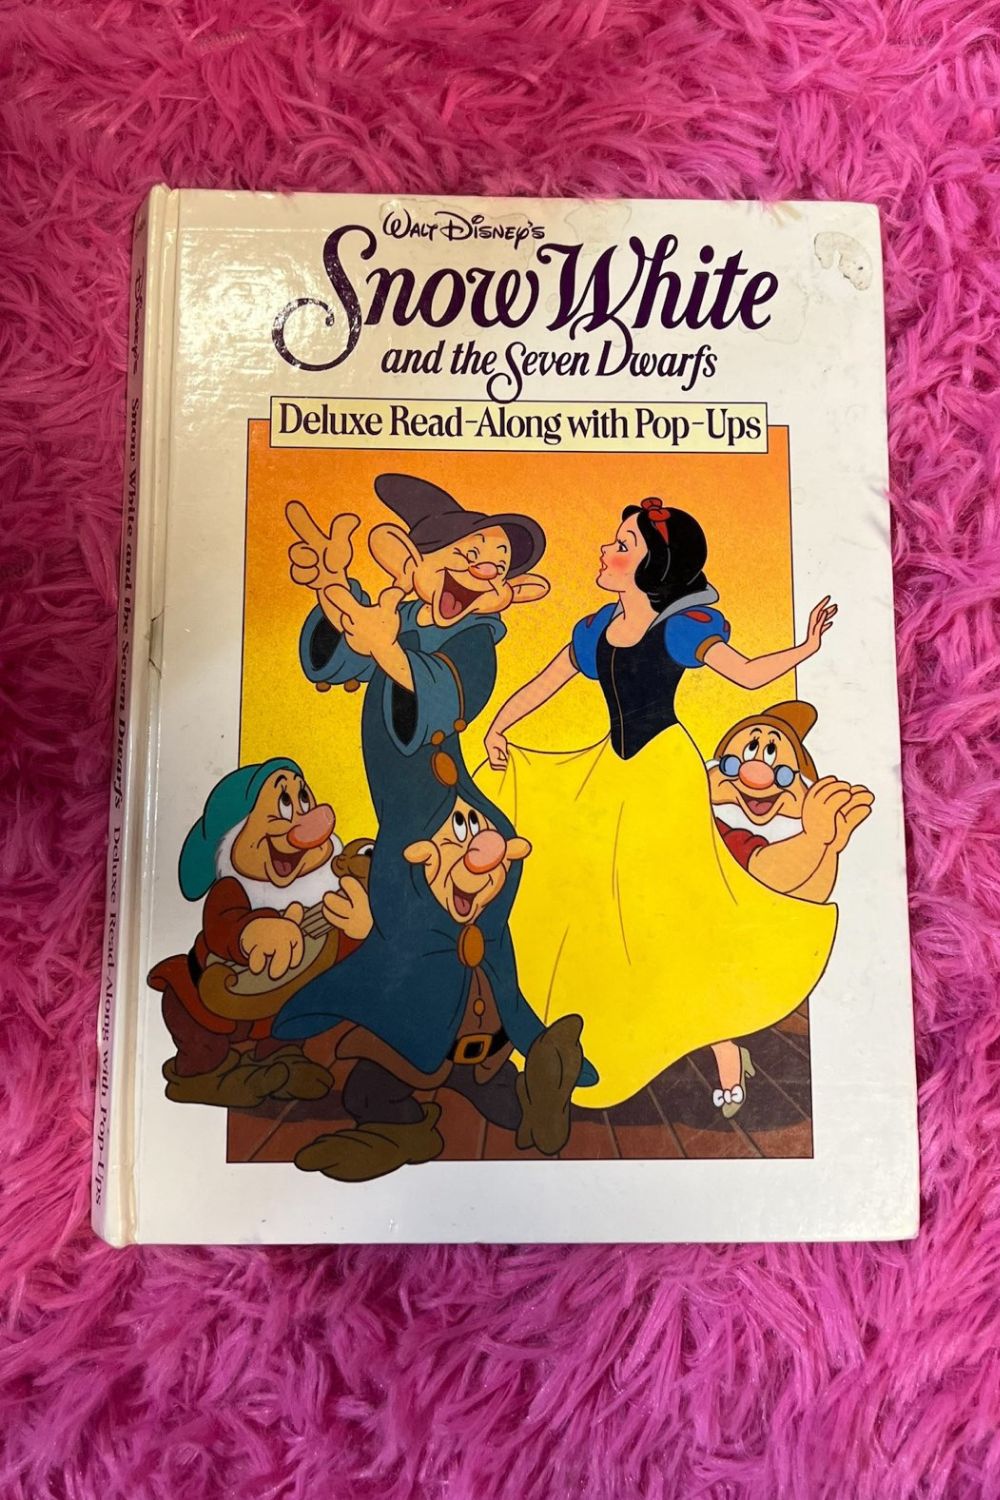 SNOW WHITE POP-UP BOOK*